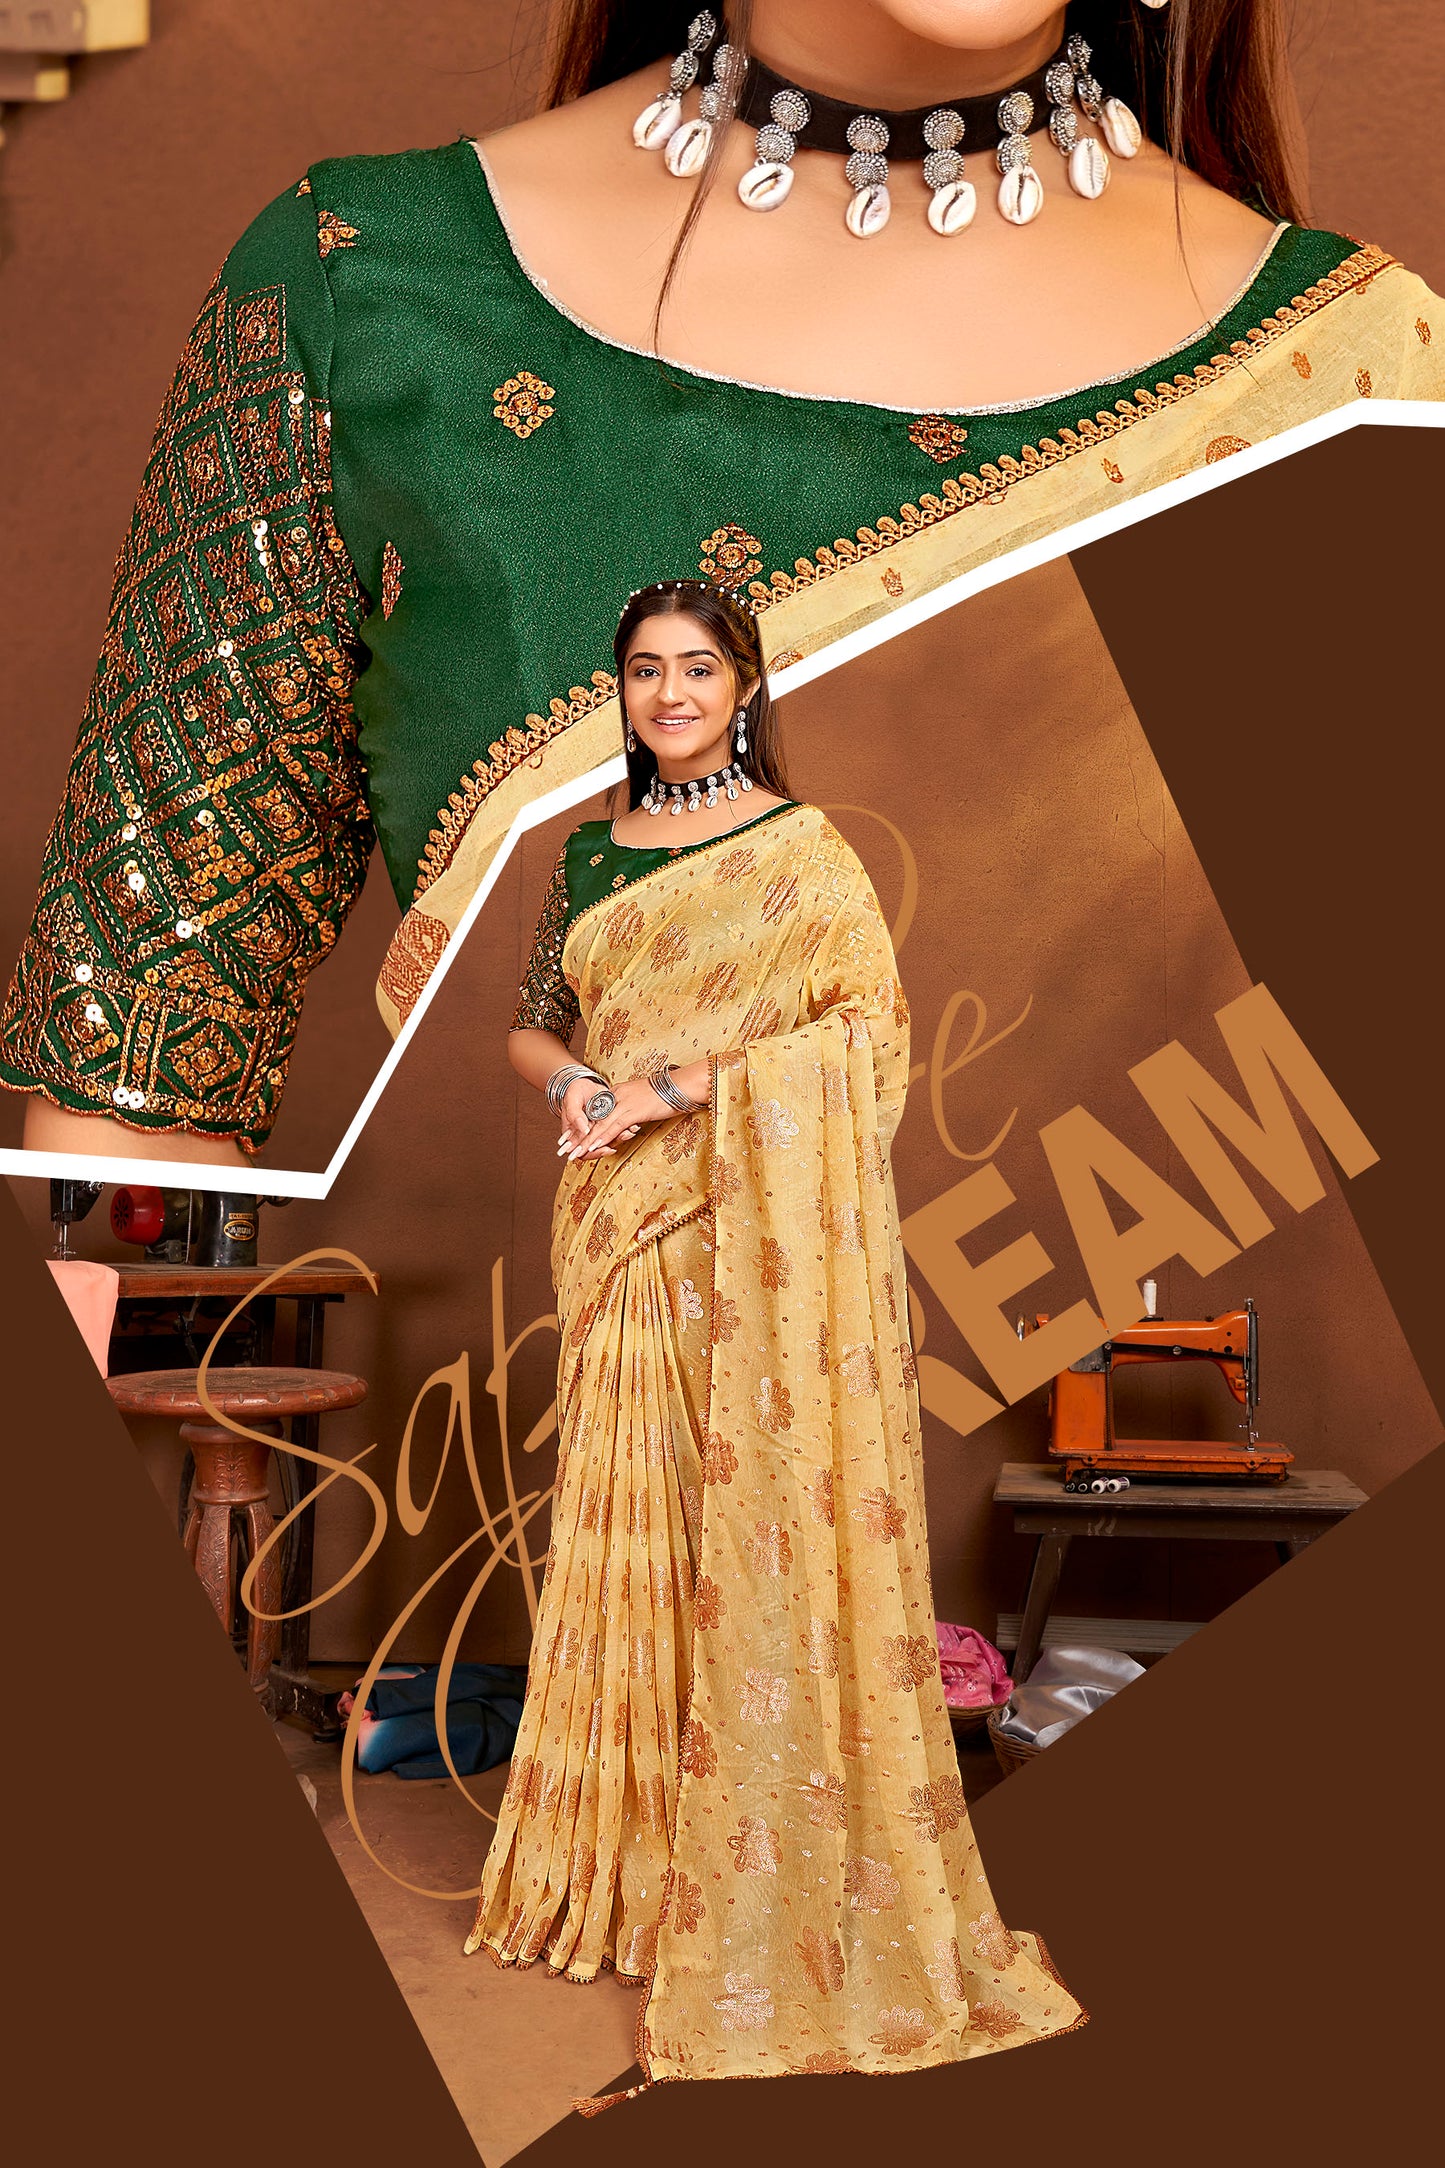 Sk Grateful Multicolor Chiffon Saree with Fancy Lace